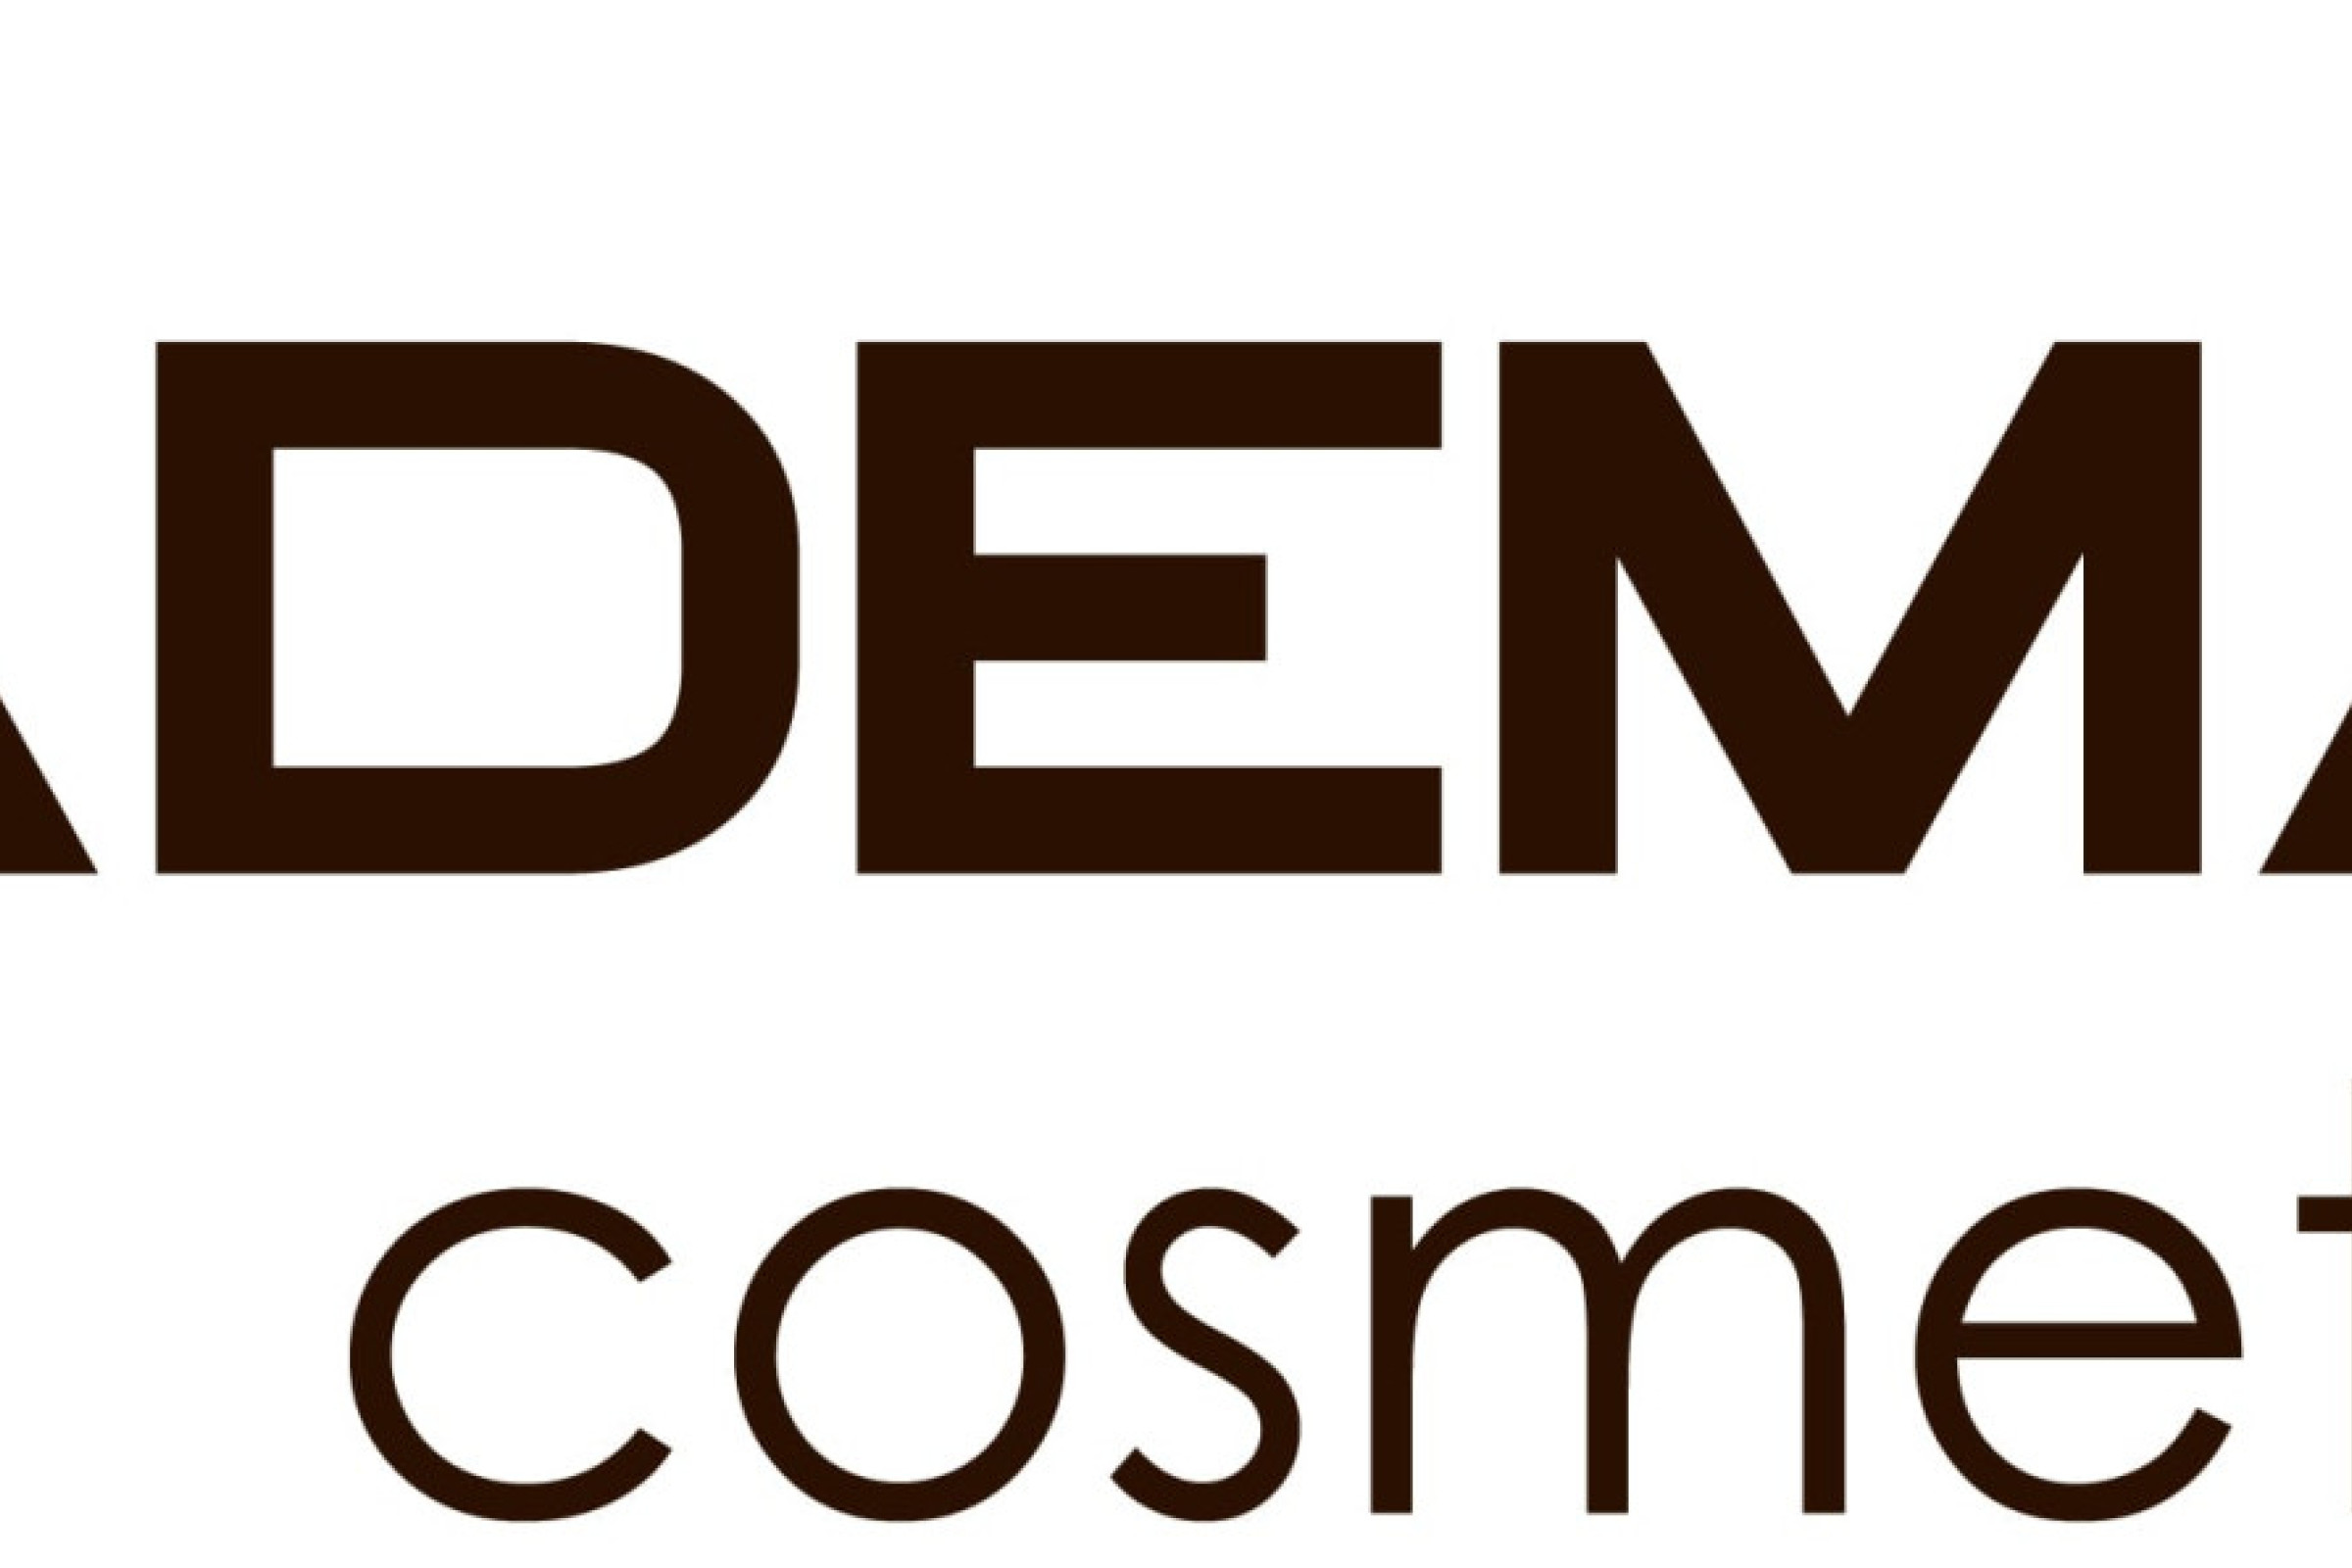 trademade cosmetics logo